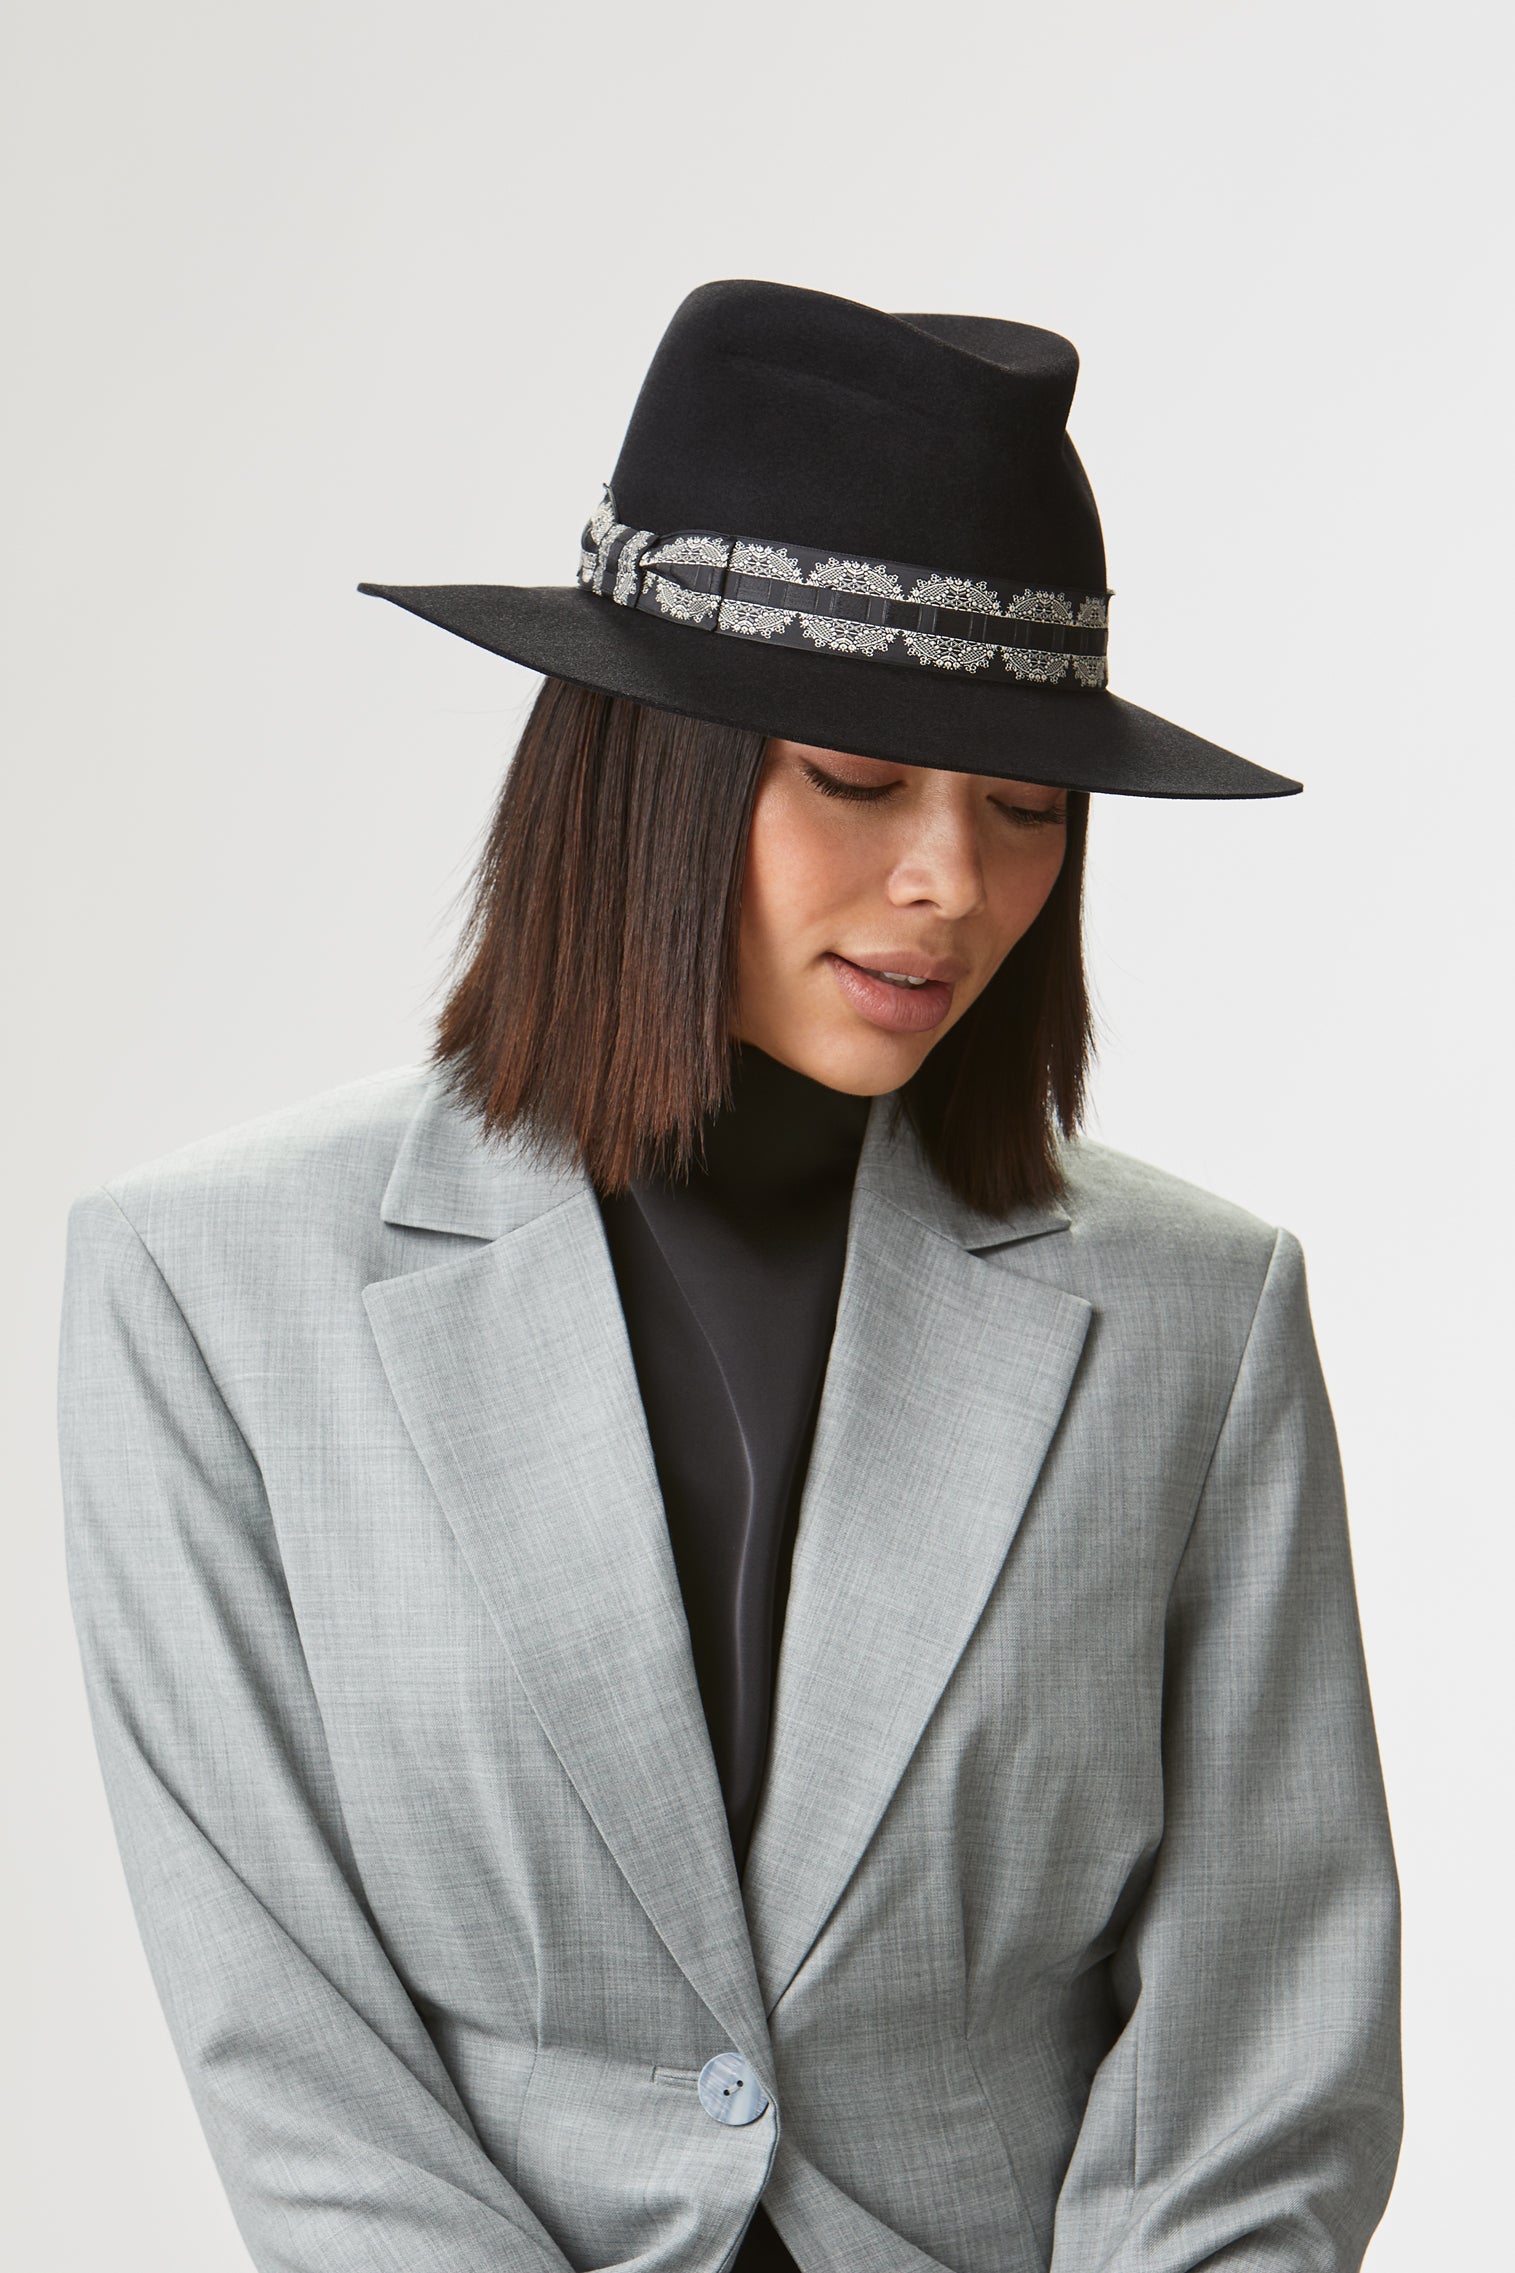 Marissa Fedora - Women’s Hats - Lock & Co. Hatters London UK